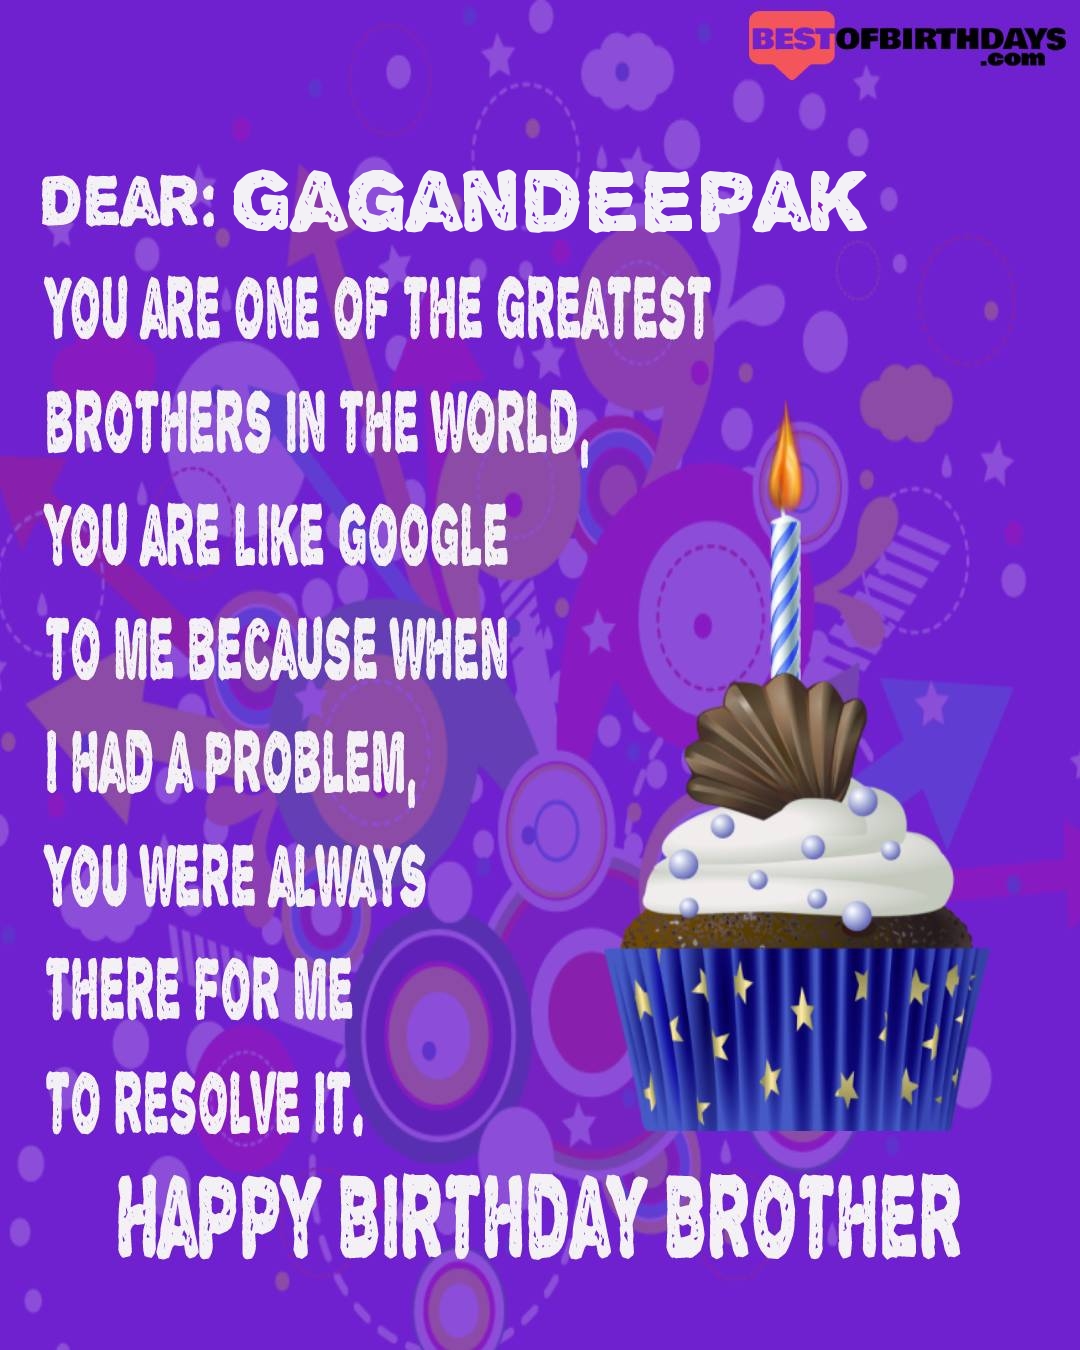 Happy birthday gagandeepak bhai brother bro